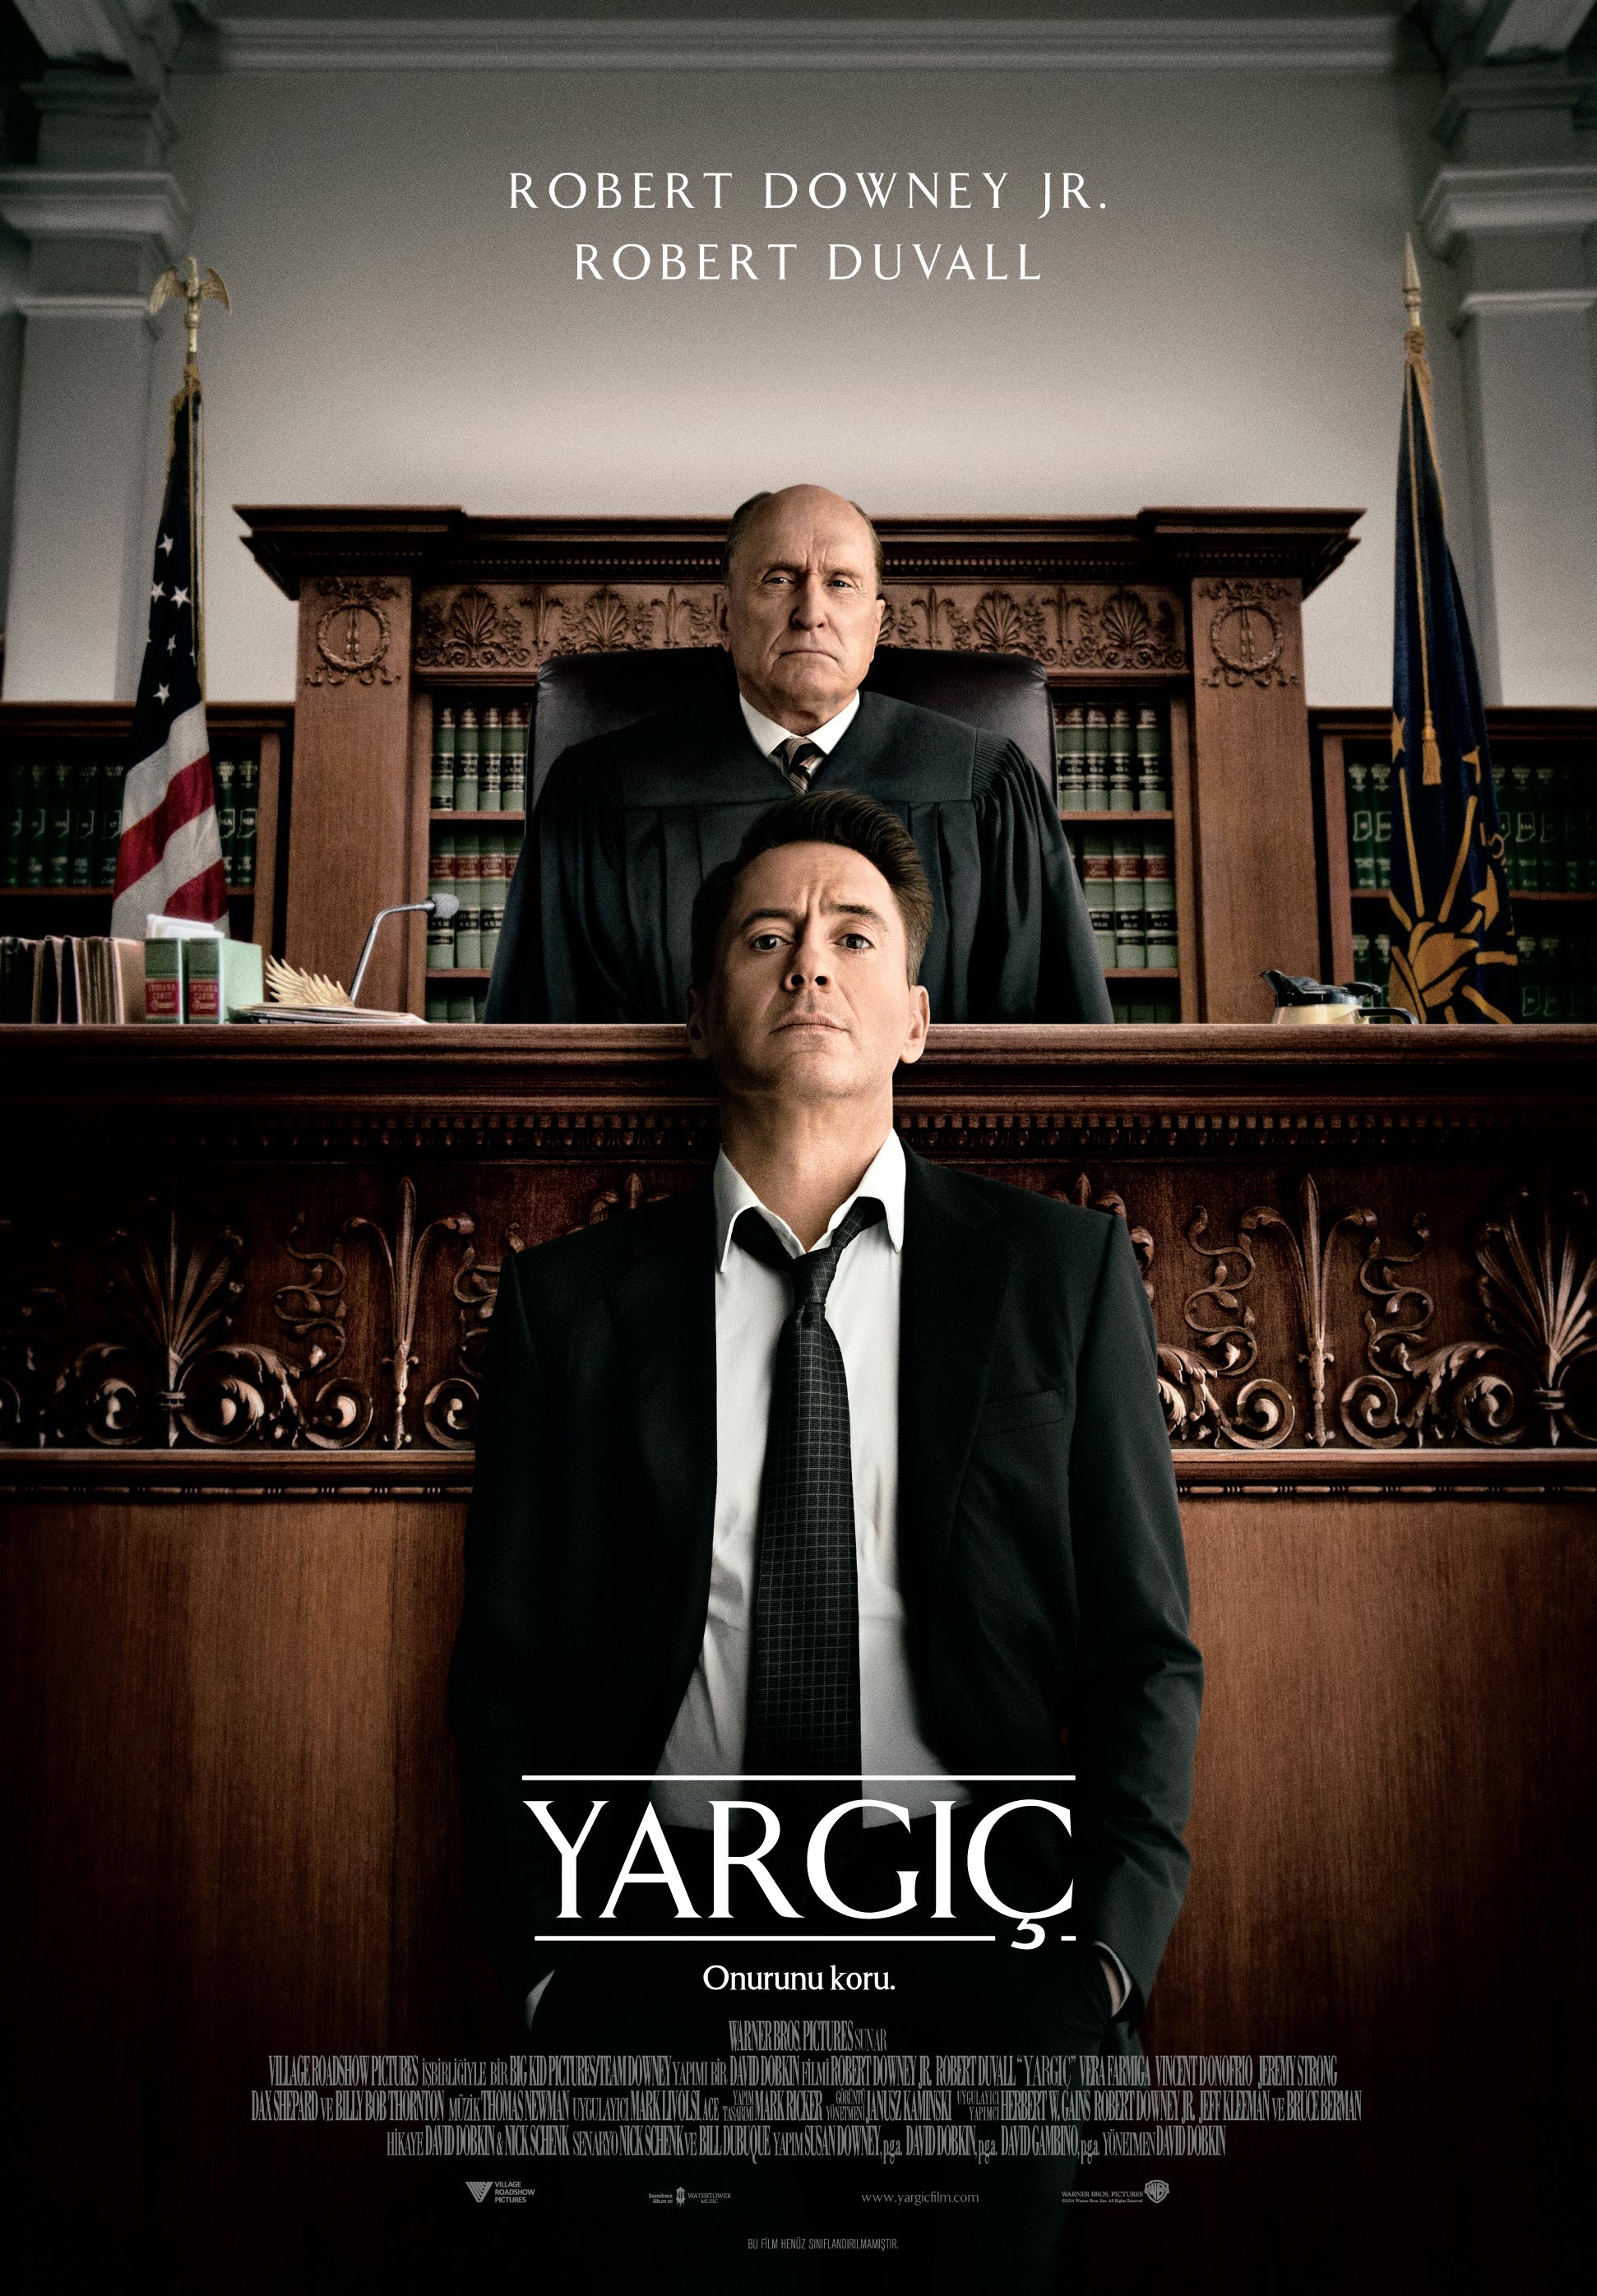 YARGIÇ “The Judge”